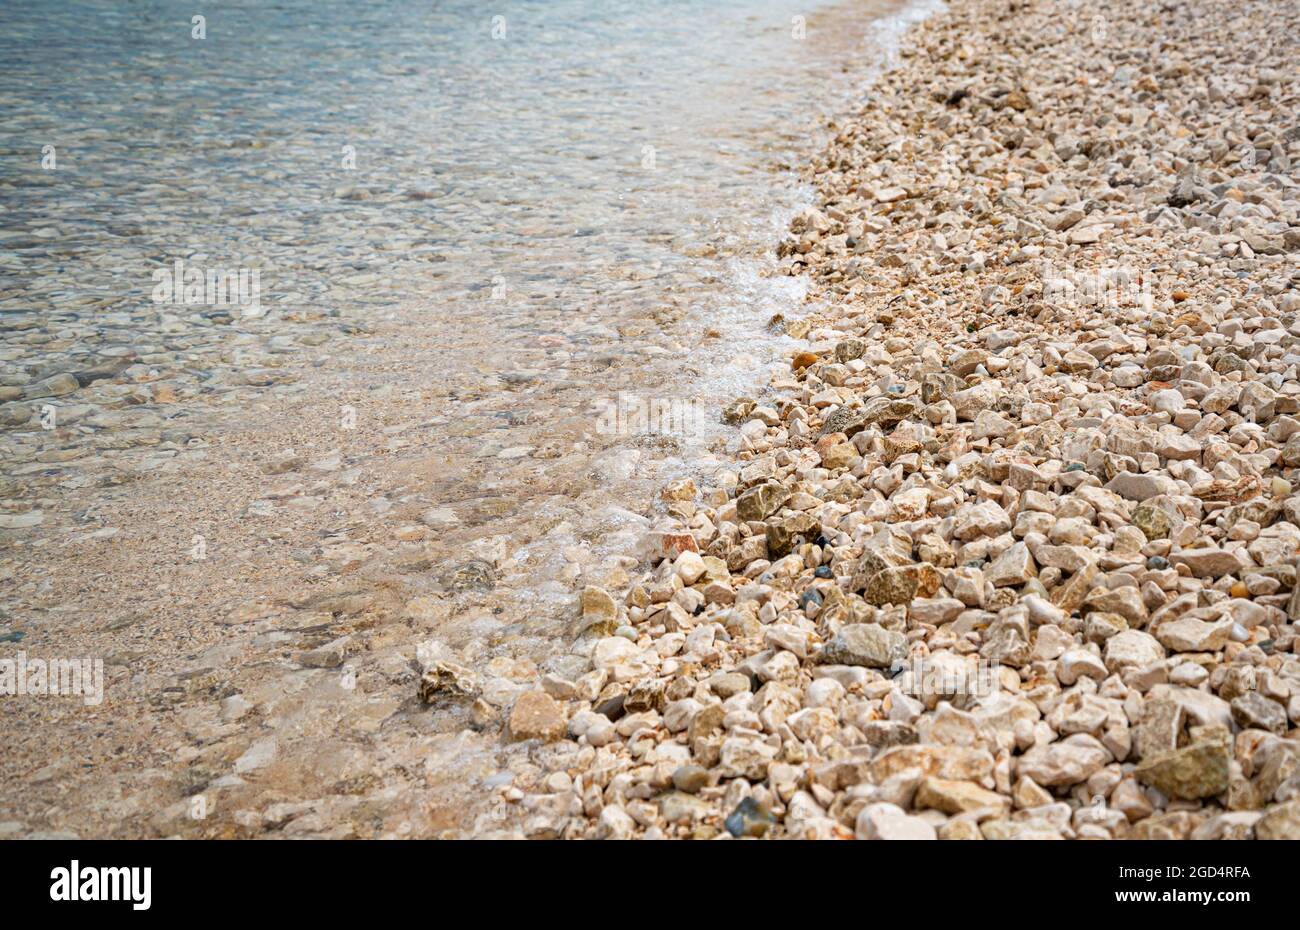 Felsiger Meeresboden mit Wasser. Stockfoto